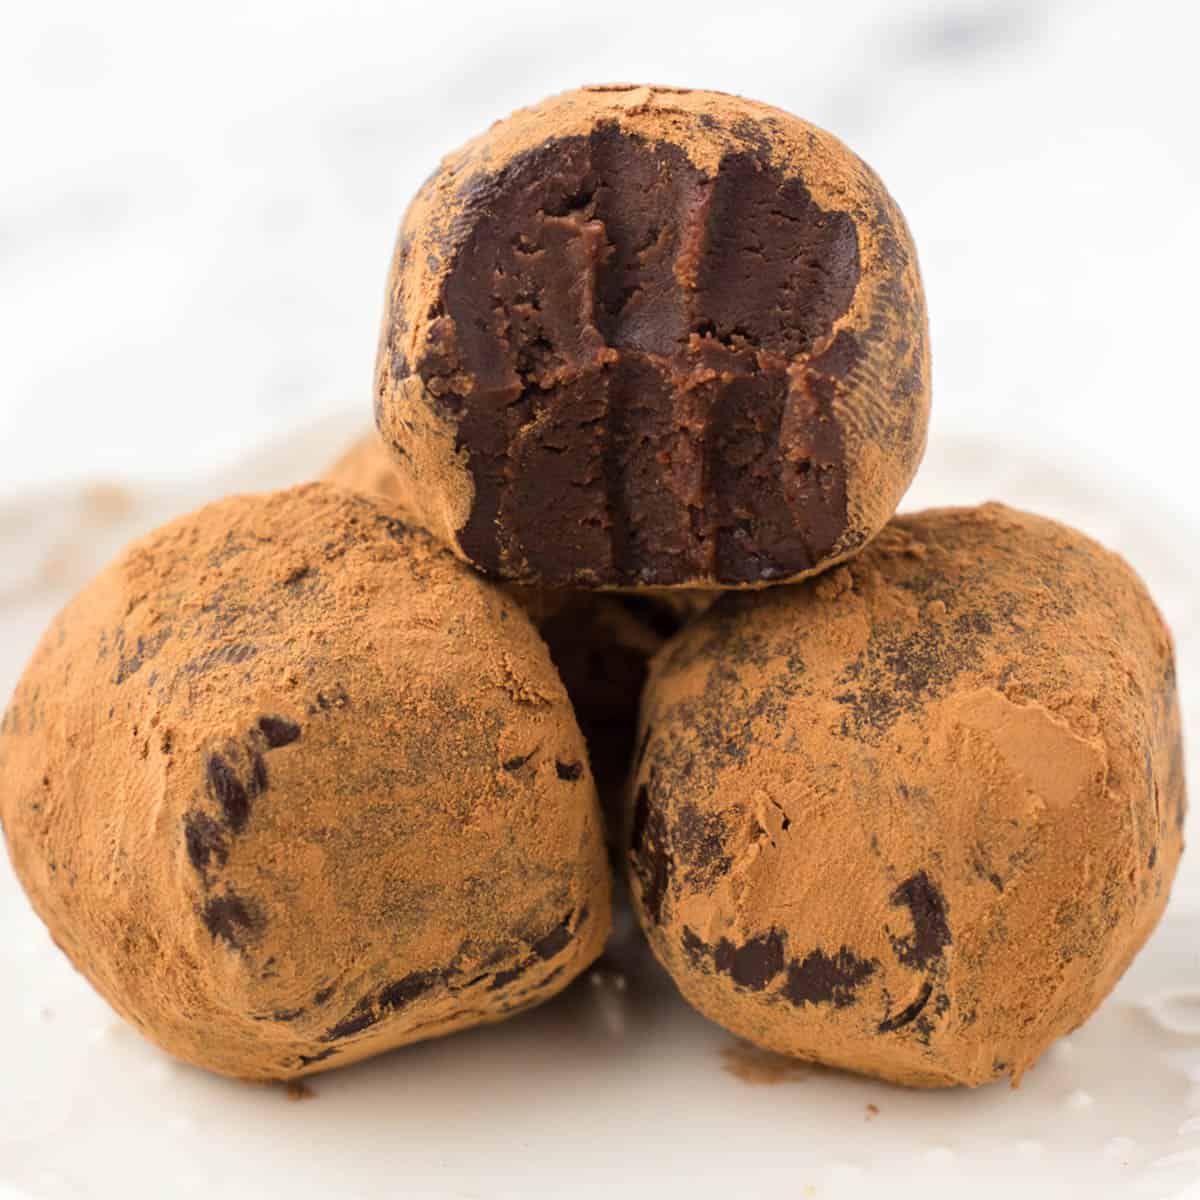 Dark chocolate Kahlua truffles coated in cocoa powder in a pretty white bowl.